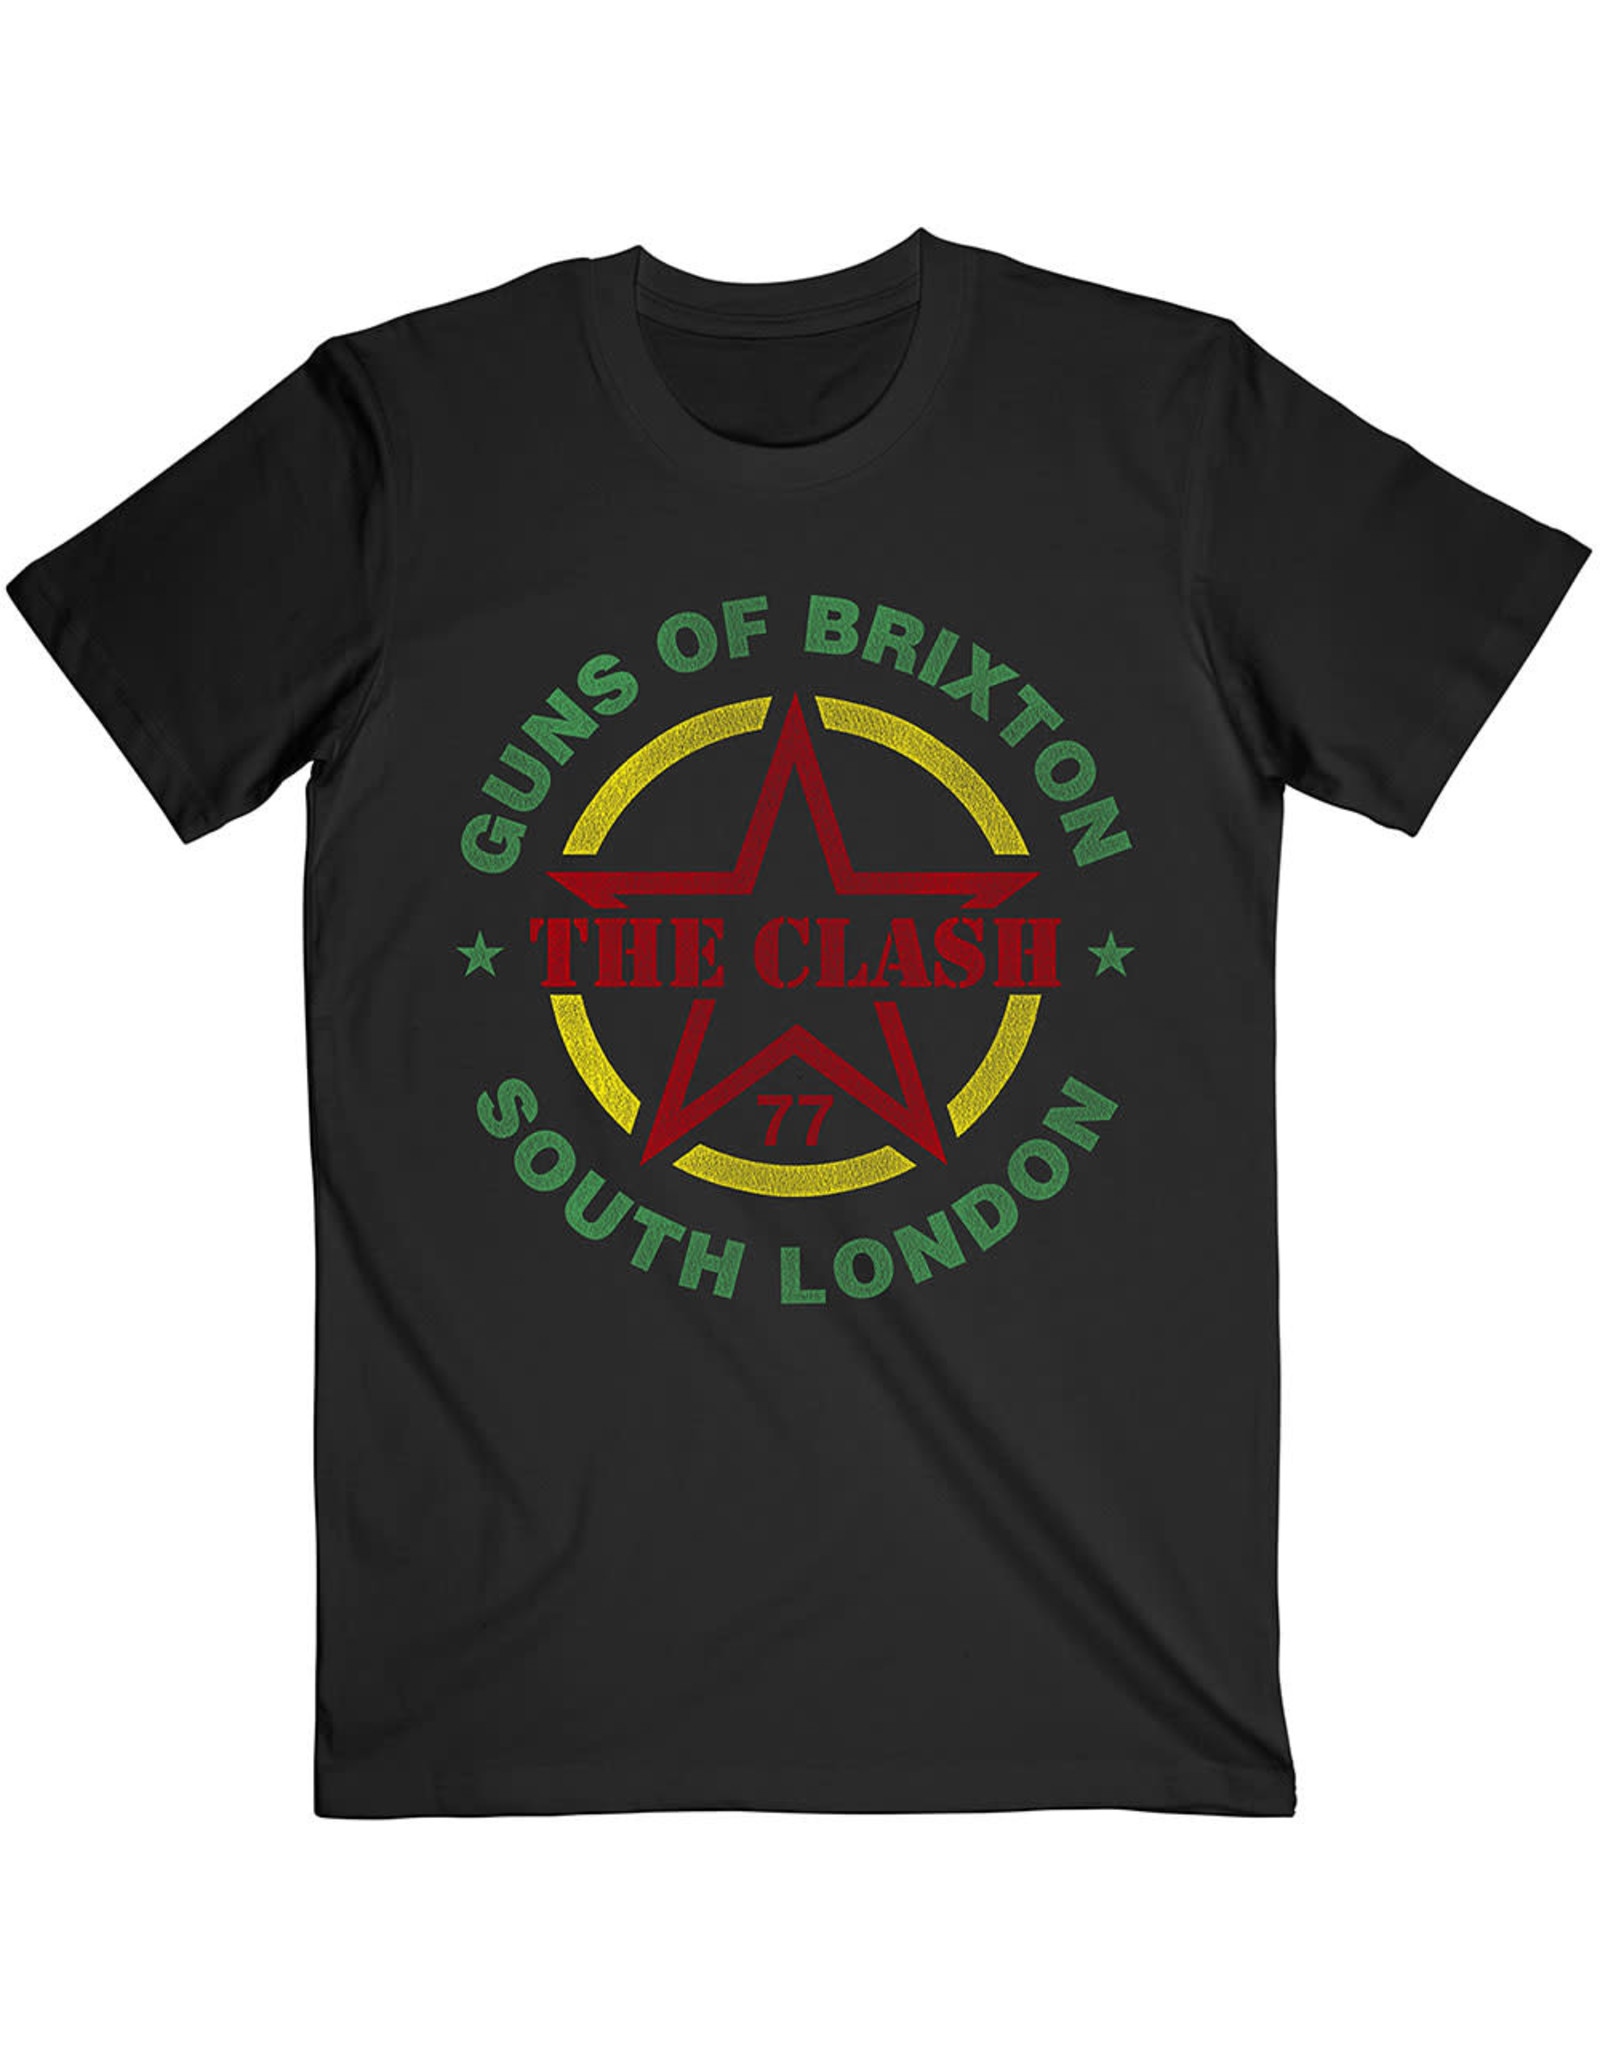 The Clash / Guns Of Brixton Tee